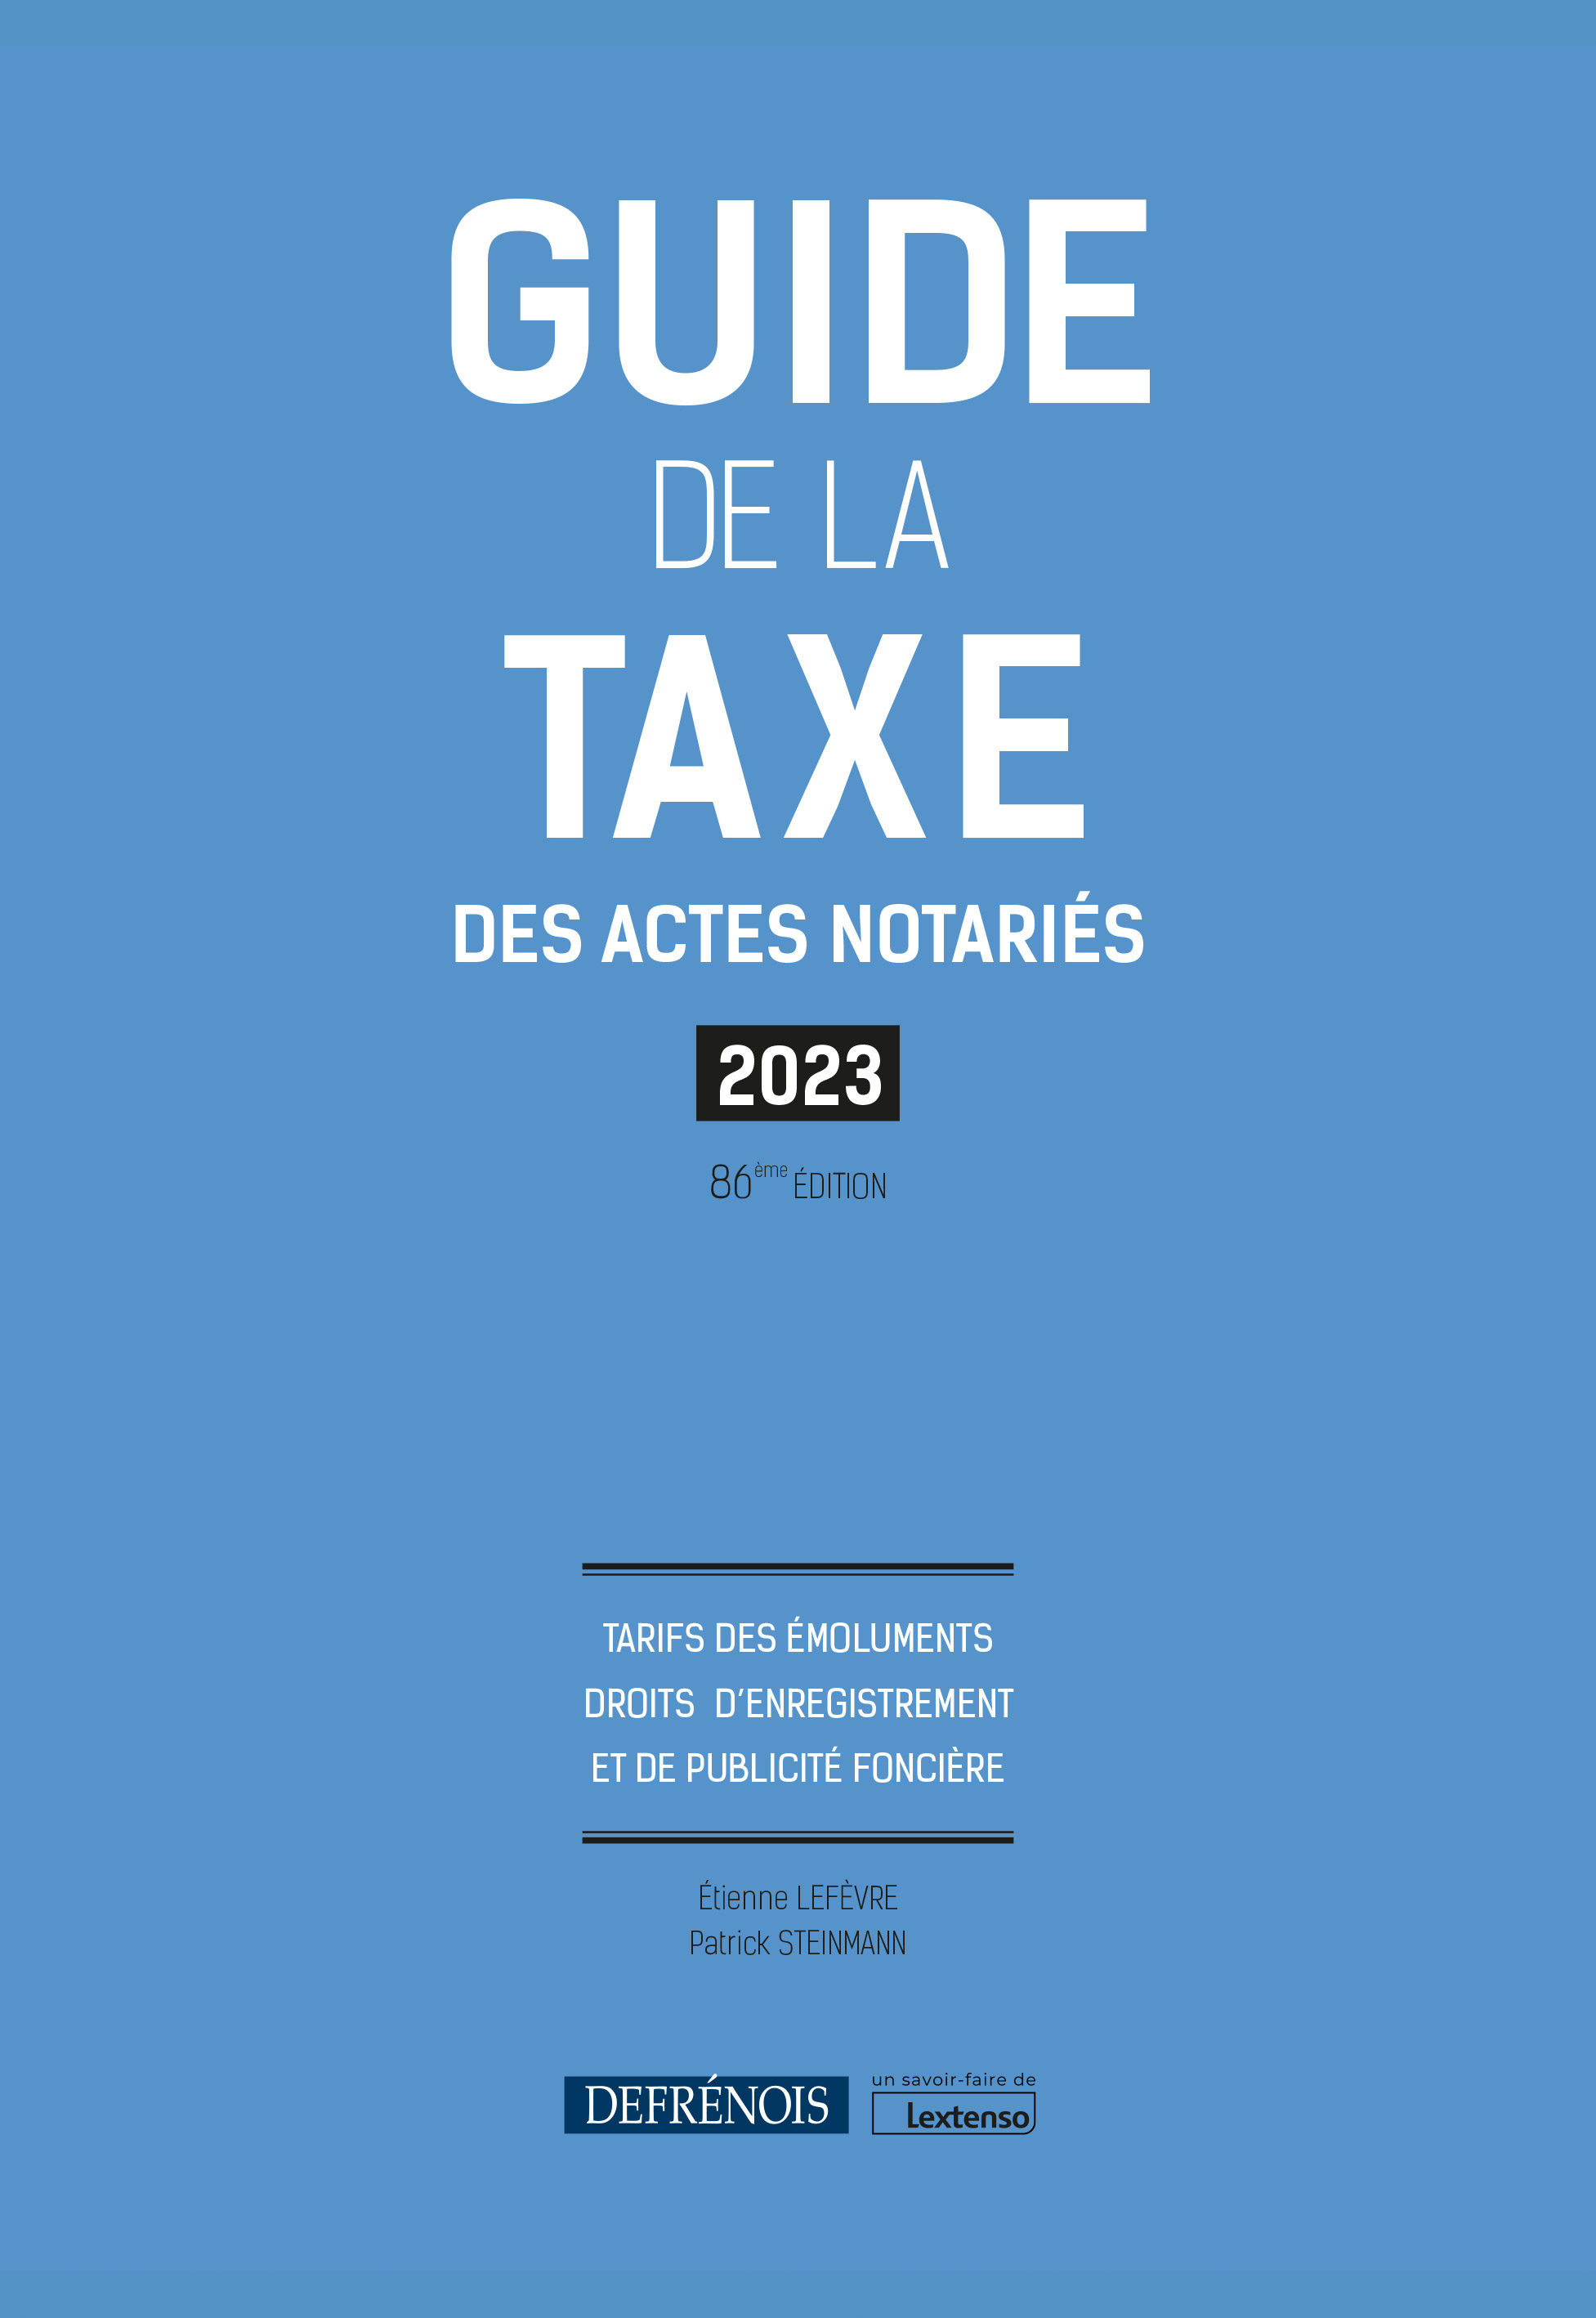 Guide de la taxe 2023